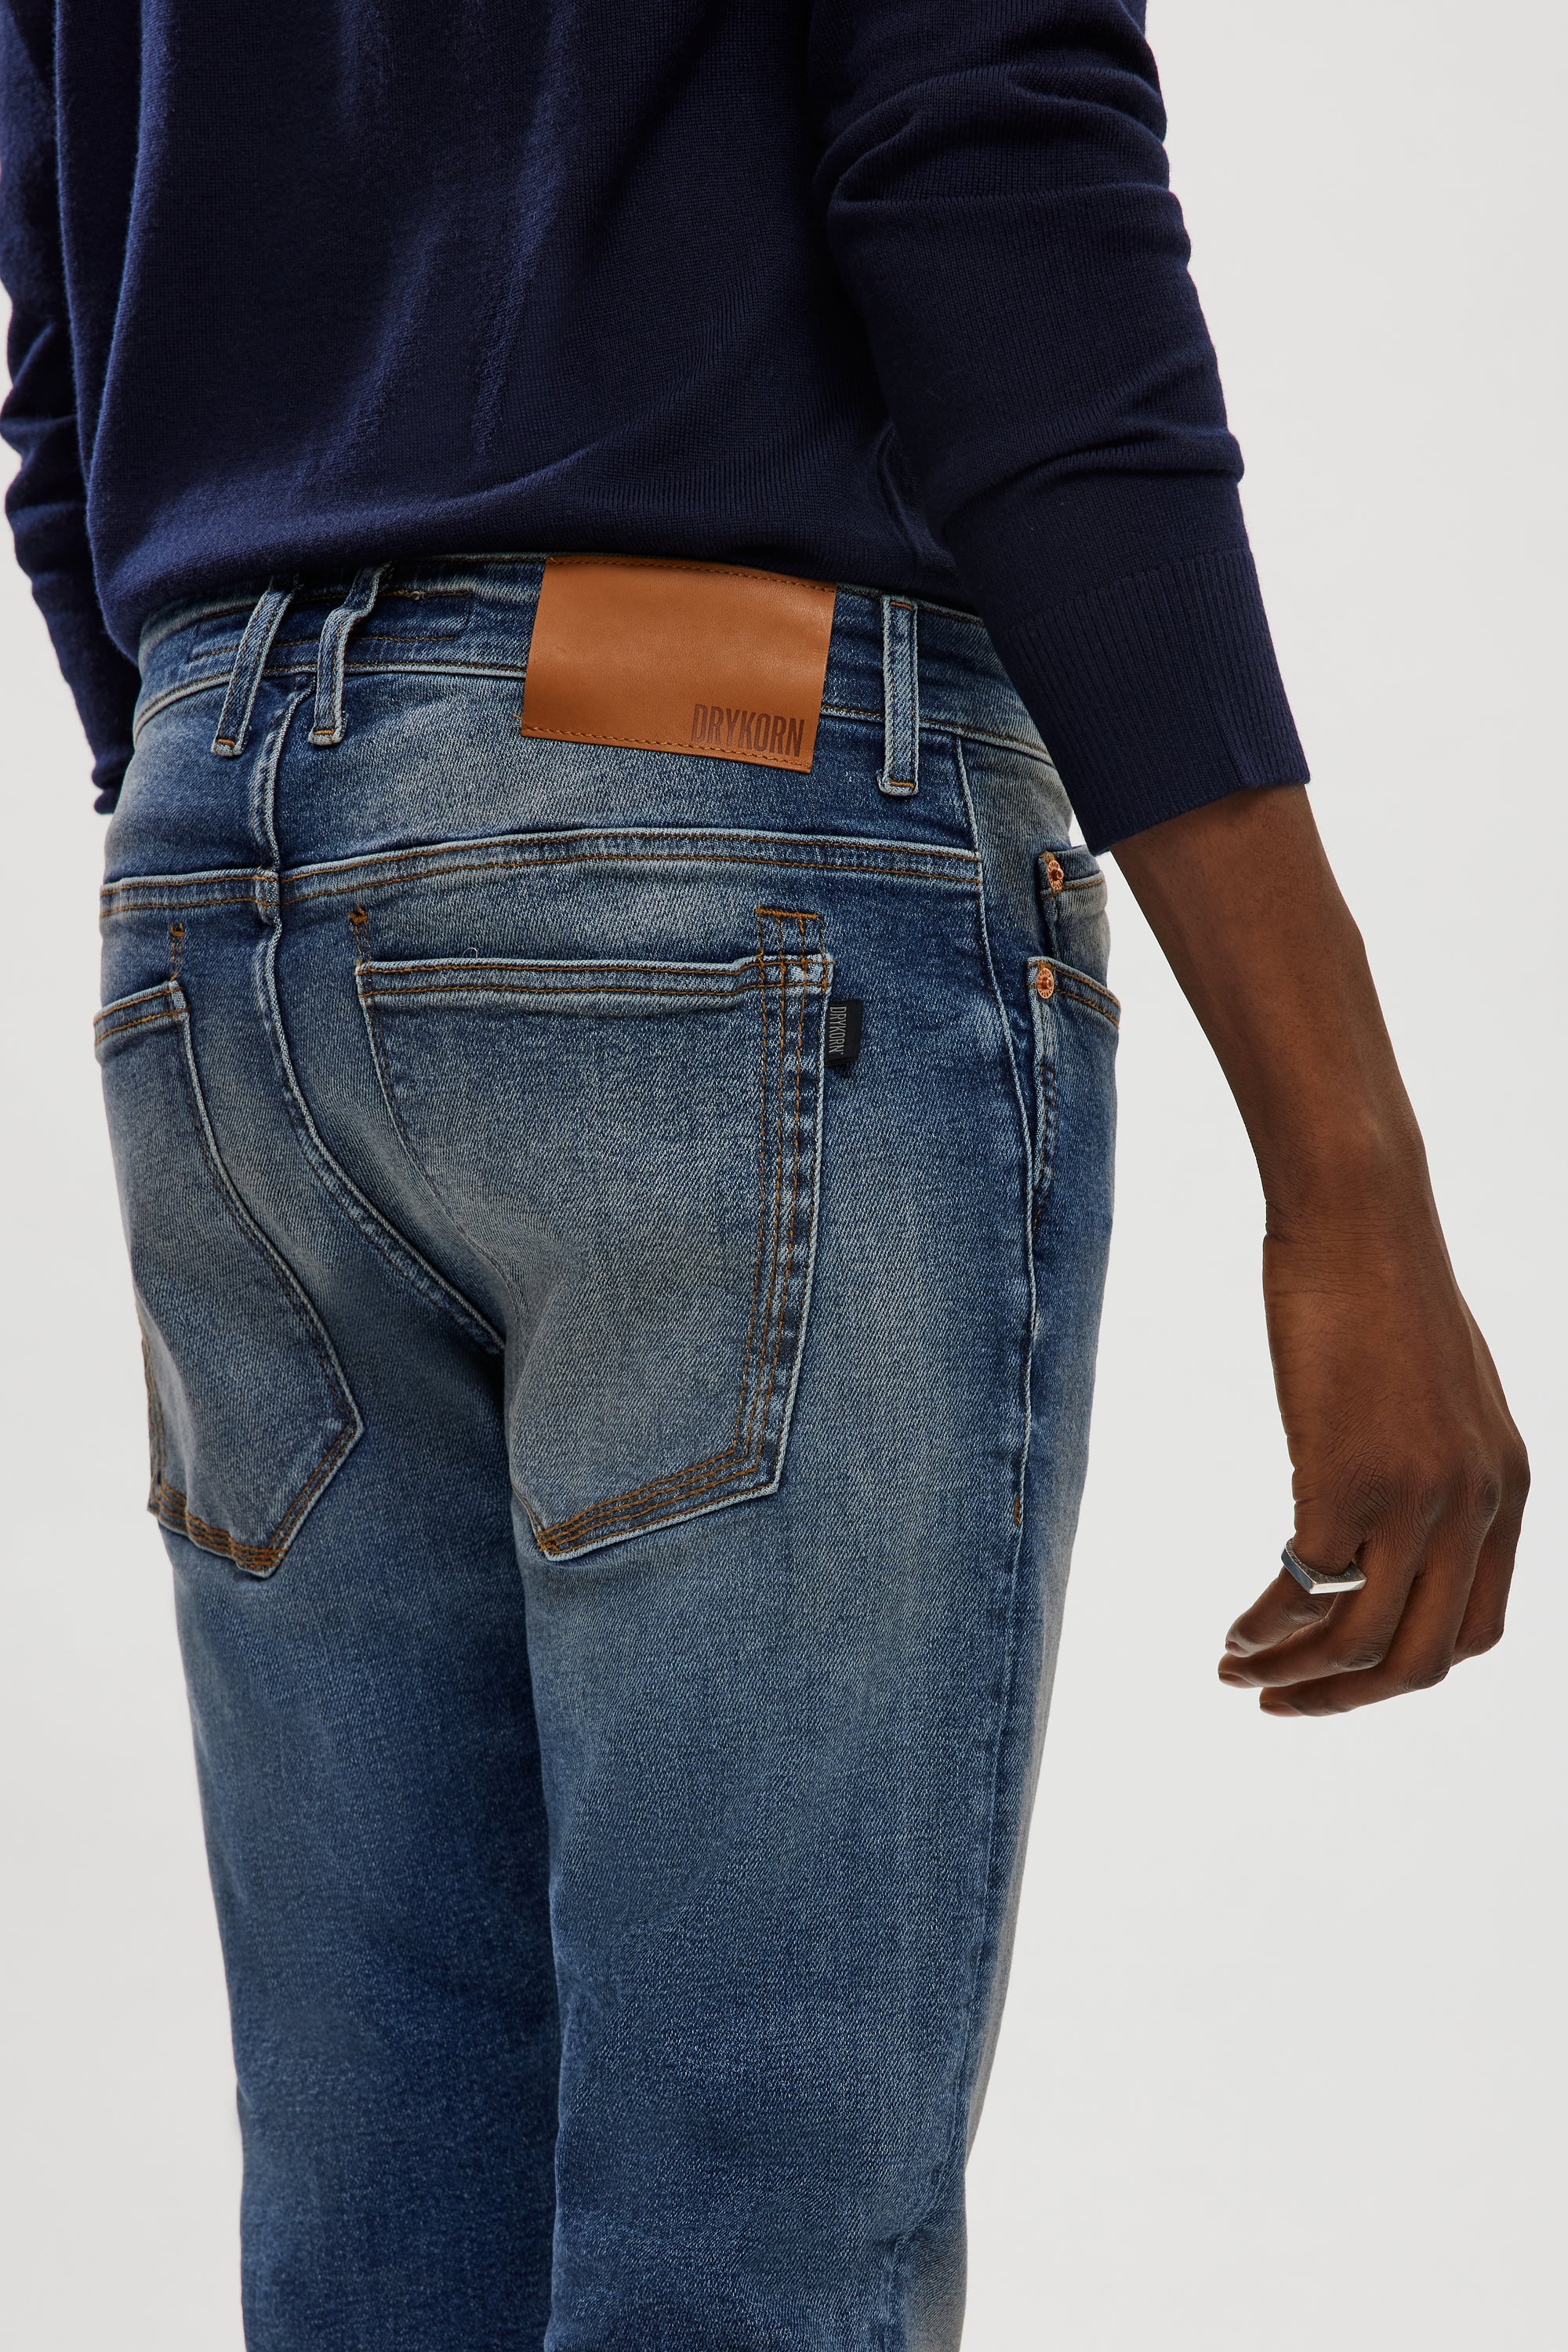 Drykorn - Jeans Slim Fit - West